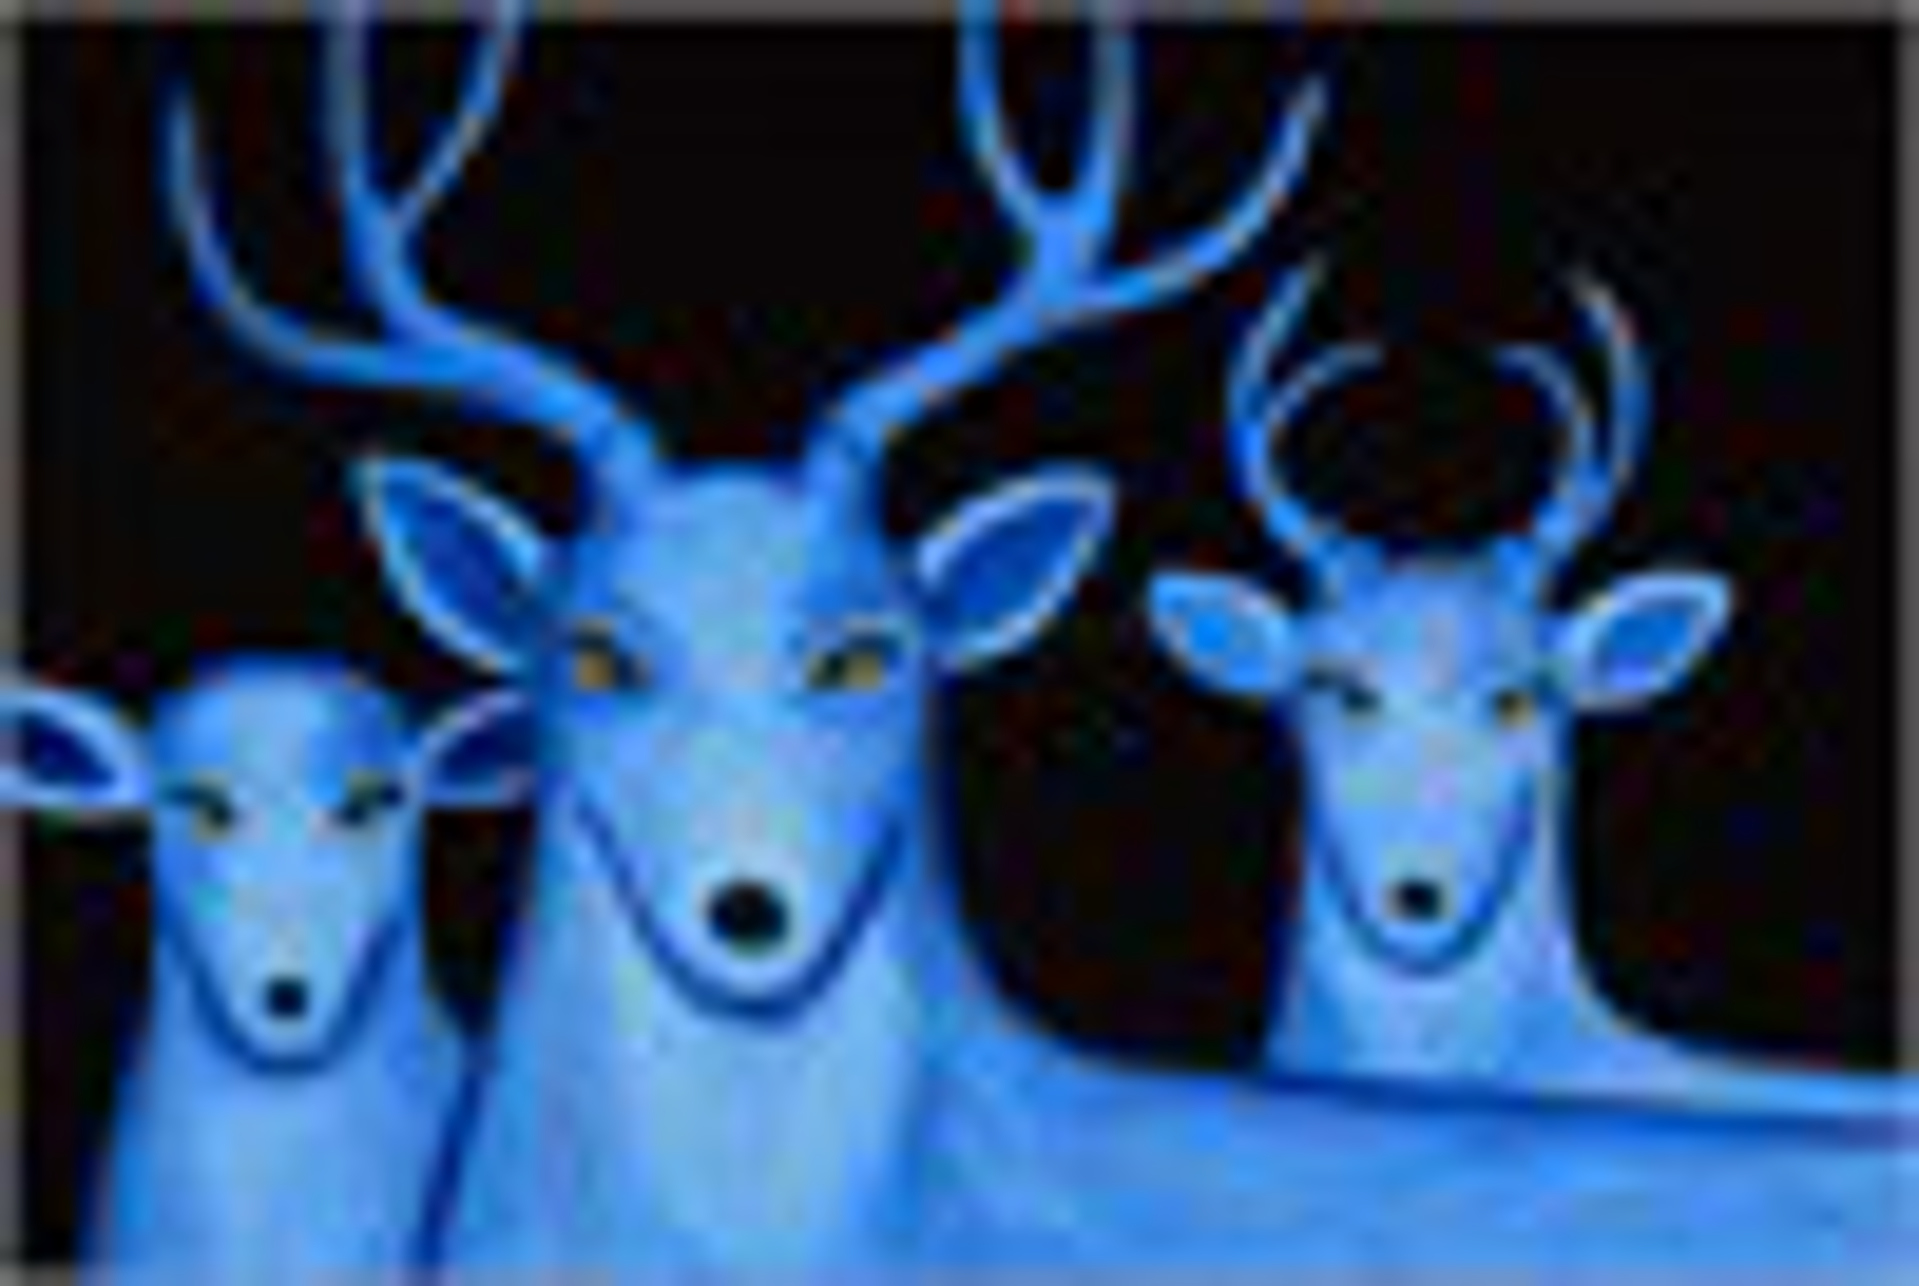 Night Sky/Three Blue Deer - MEDIUM Framed $2200 by Carole LaRoche